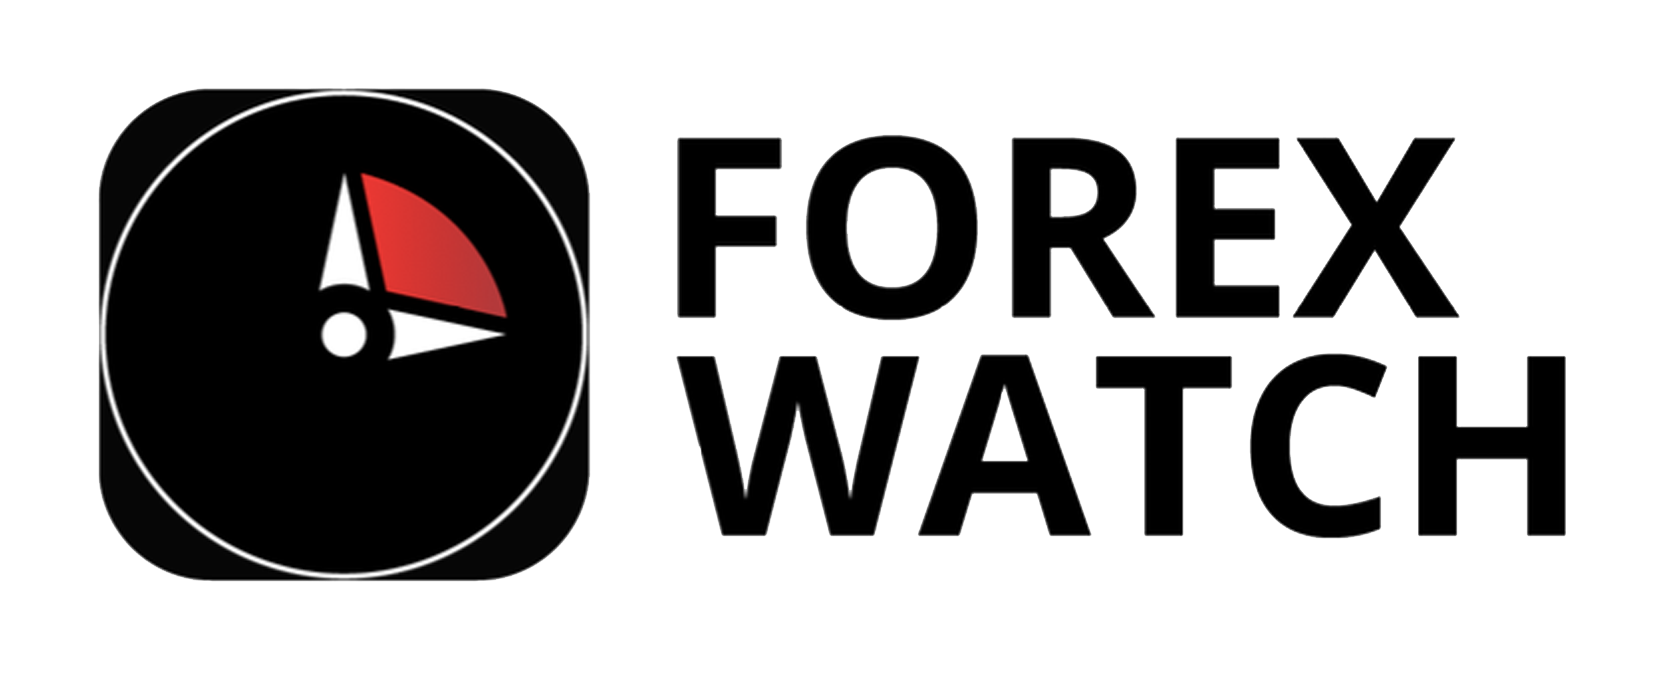 Forex Watch Logo - Horizontal